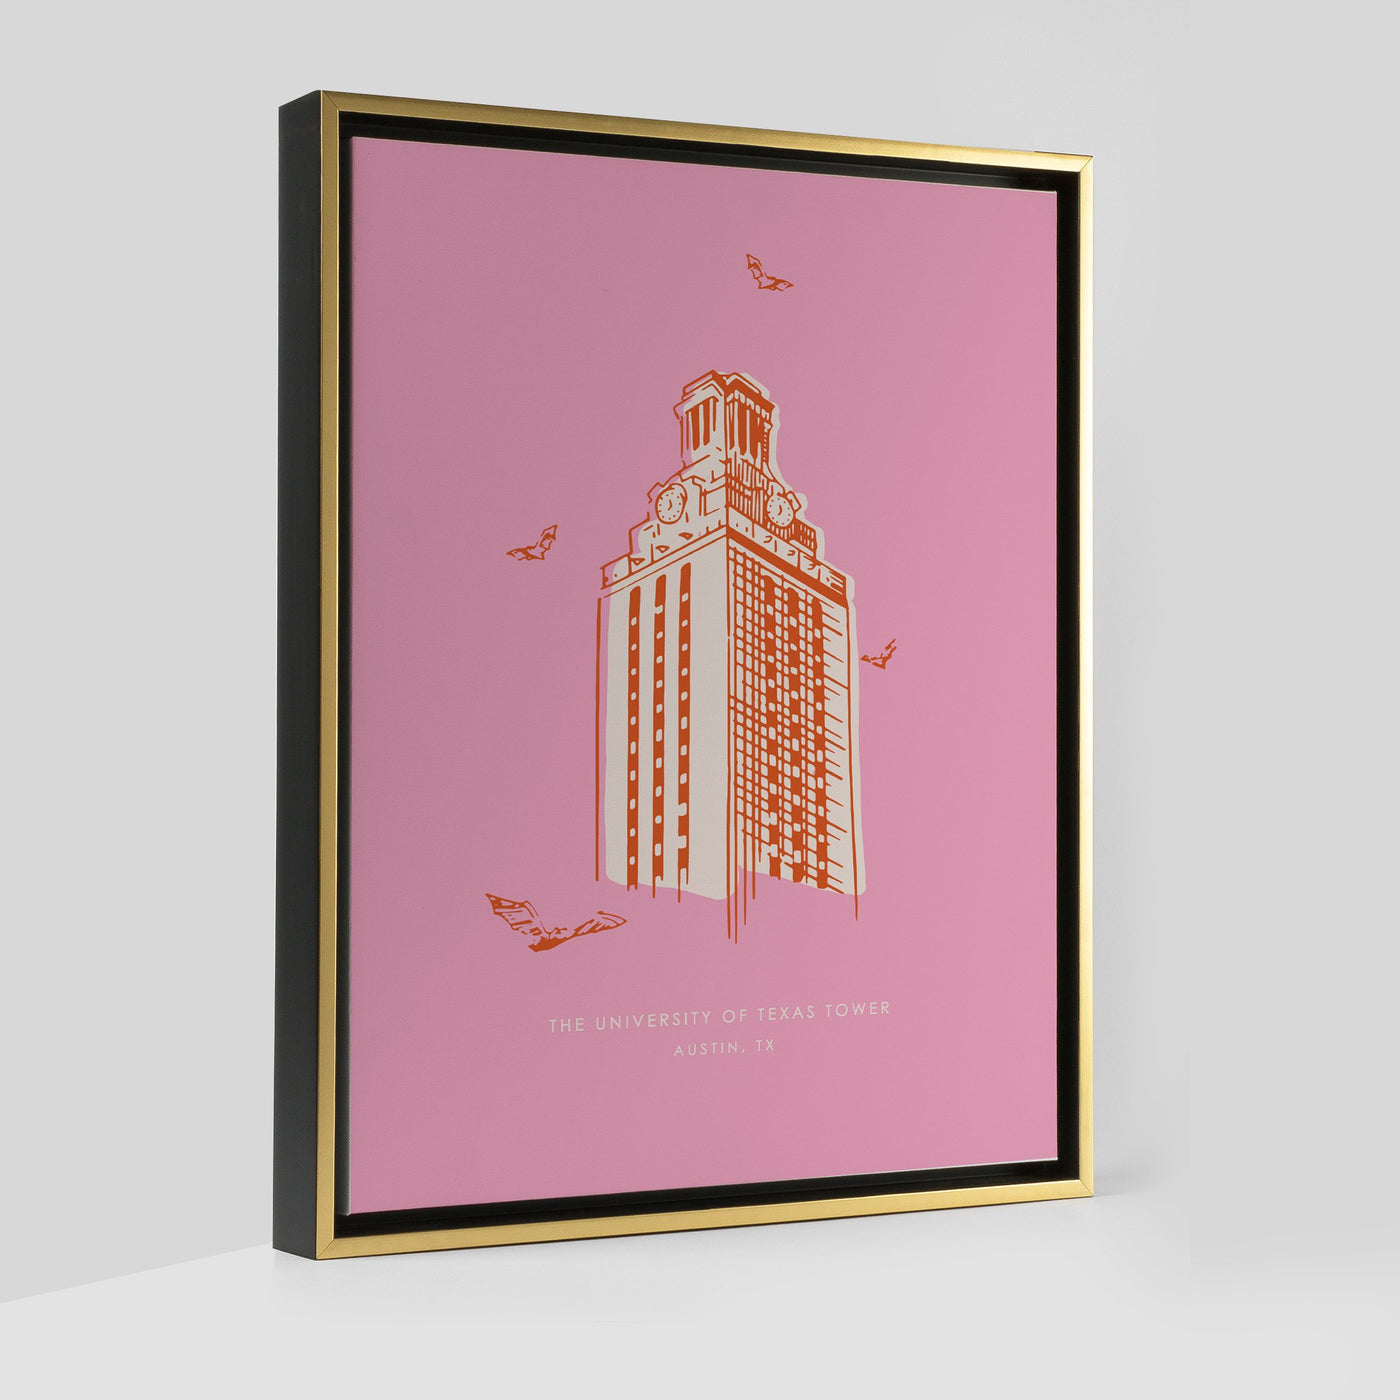 Gallery Prints Pink Canvas / 8x10 / Gold Frame 10152 Torino Tower Print dombezalergii